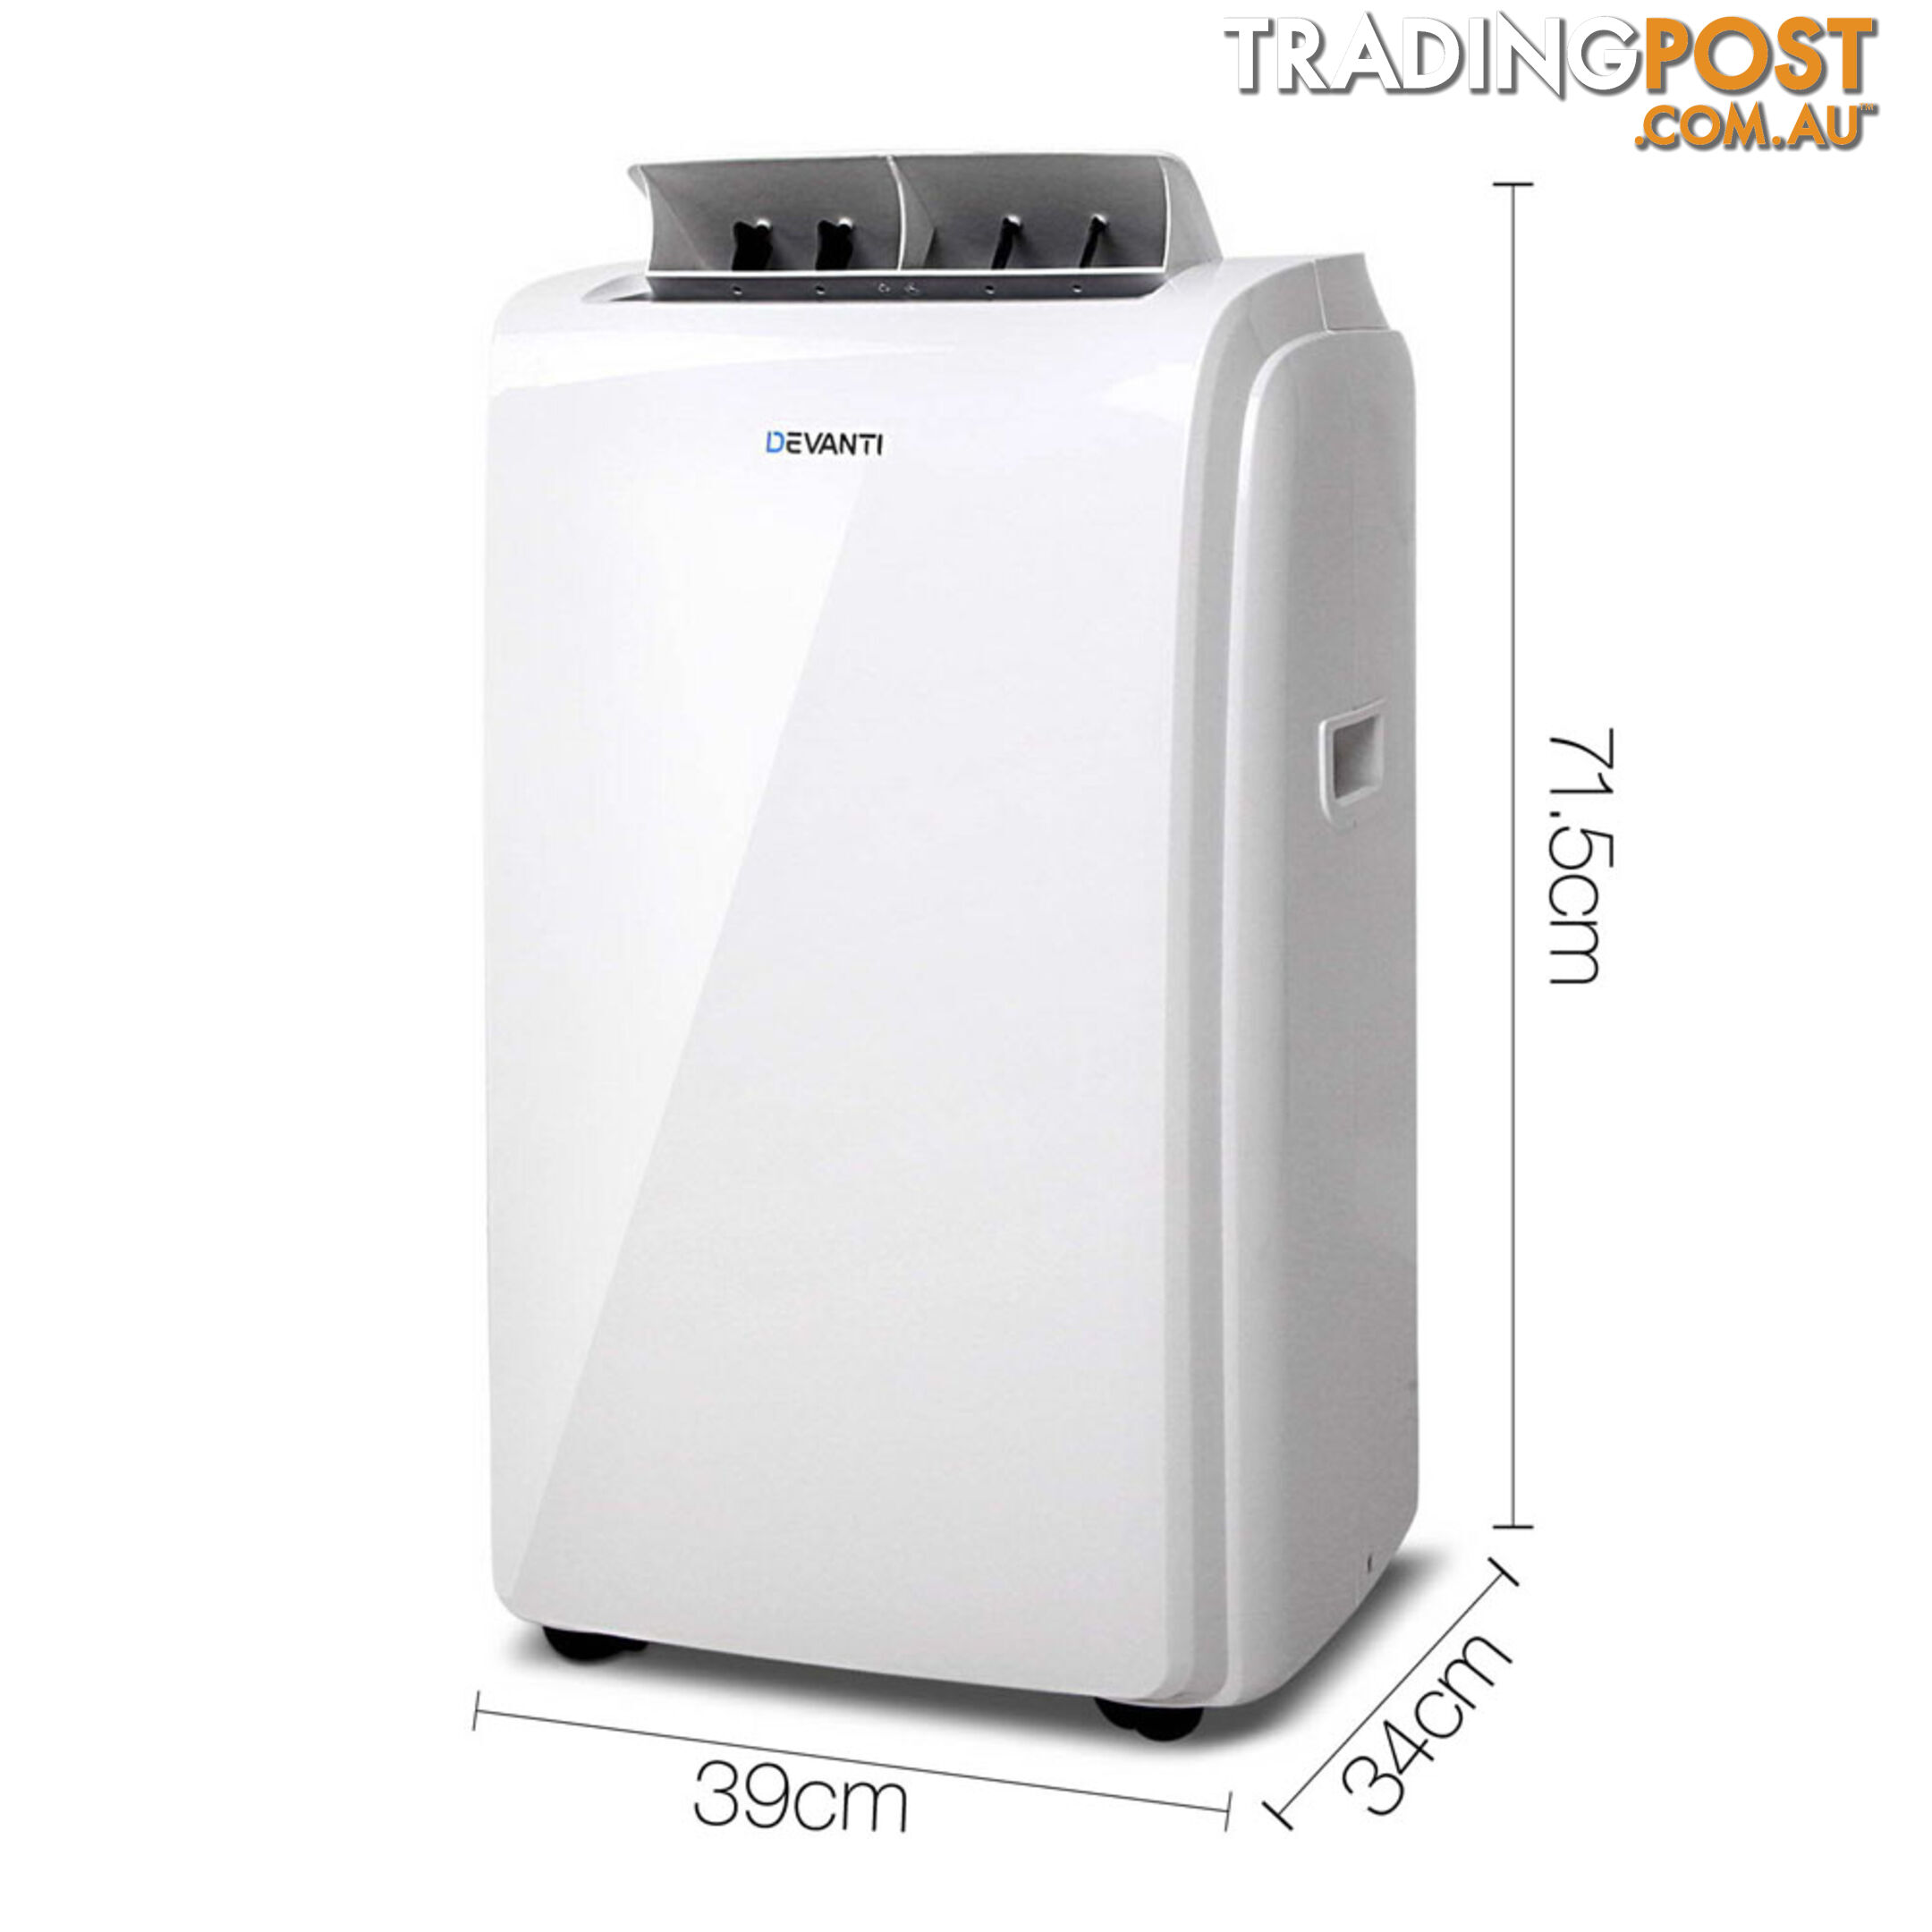 4 in 1 Portable Air Conditioner 64L - White